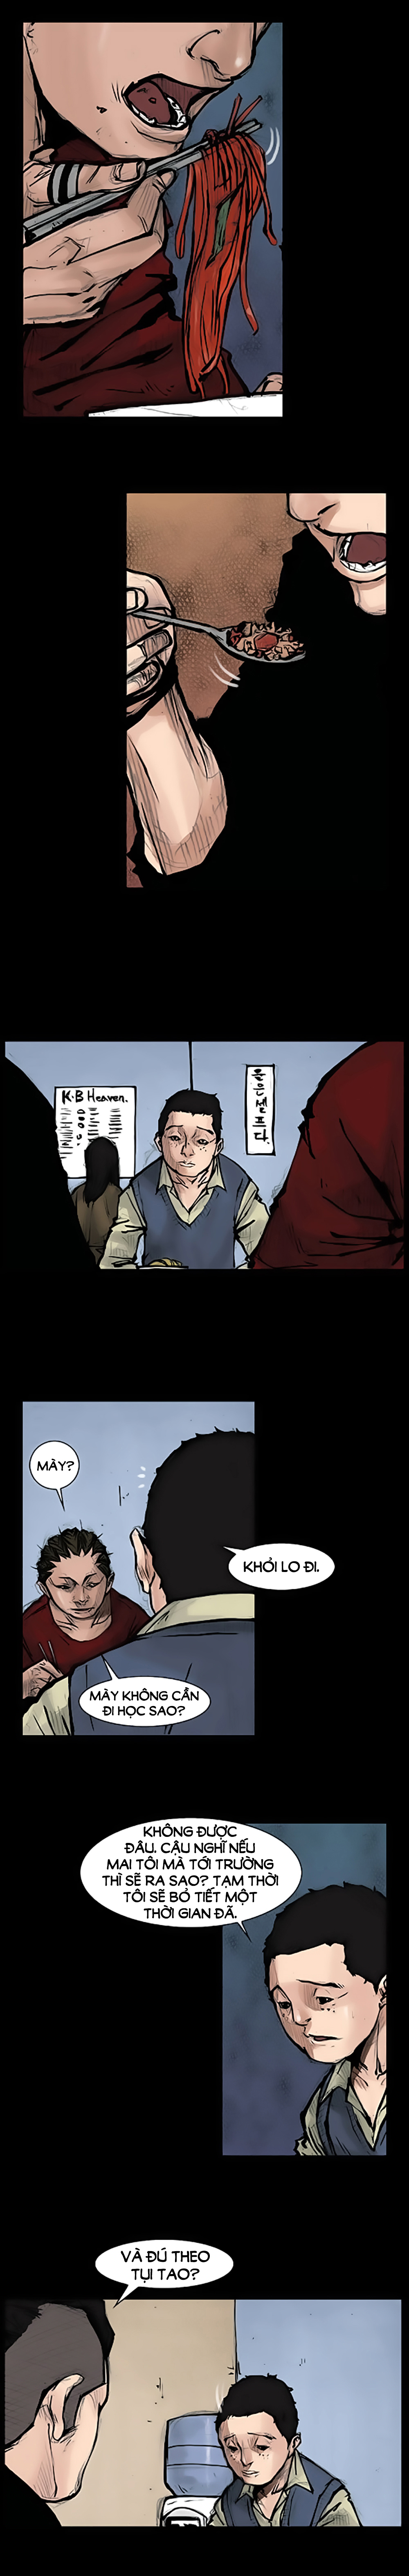 Dokgo Rewind kỳ 4 trang 3